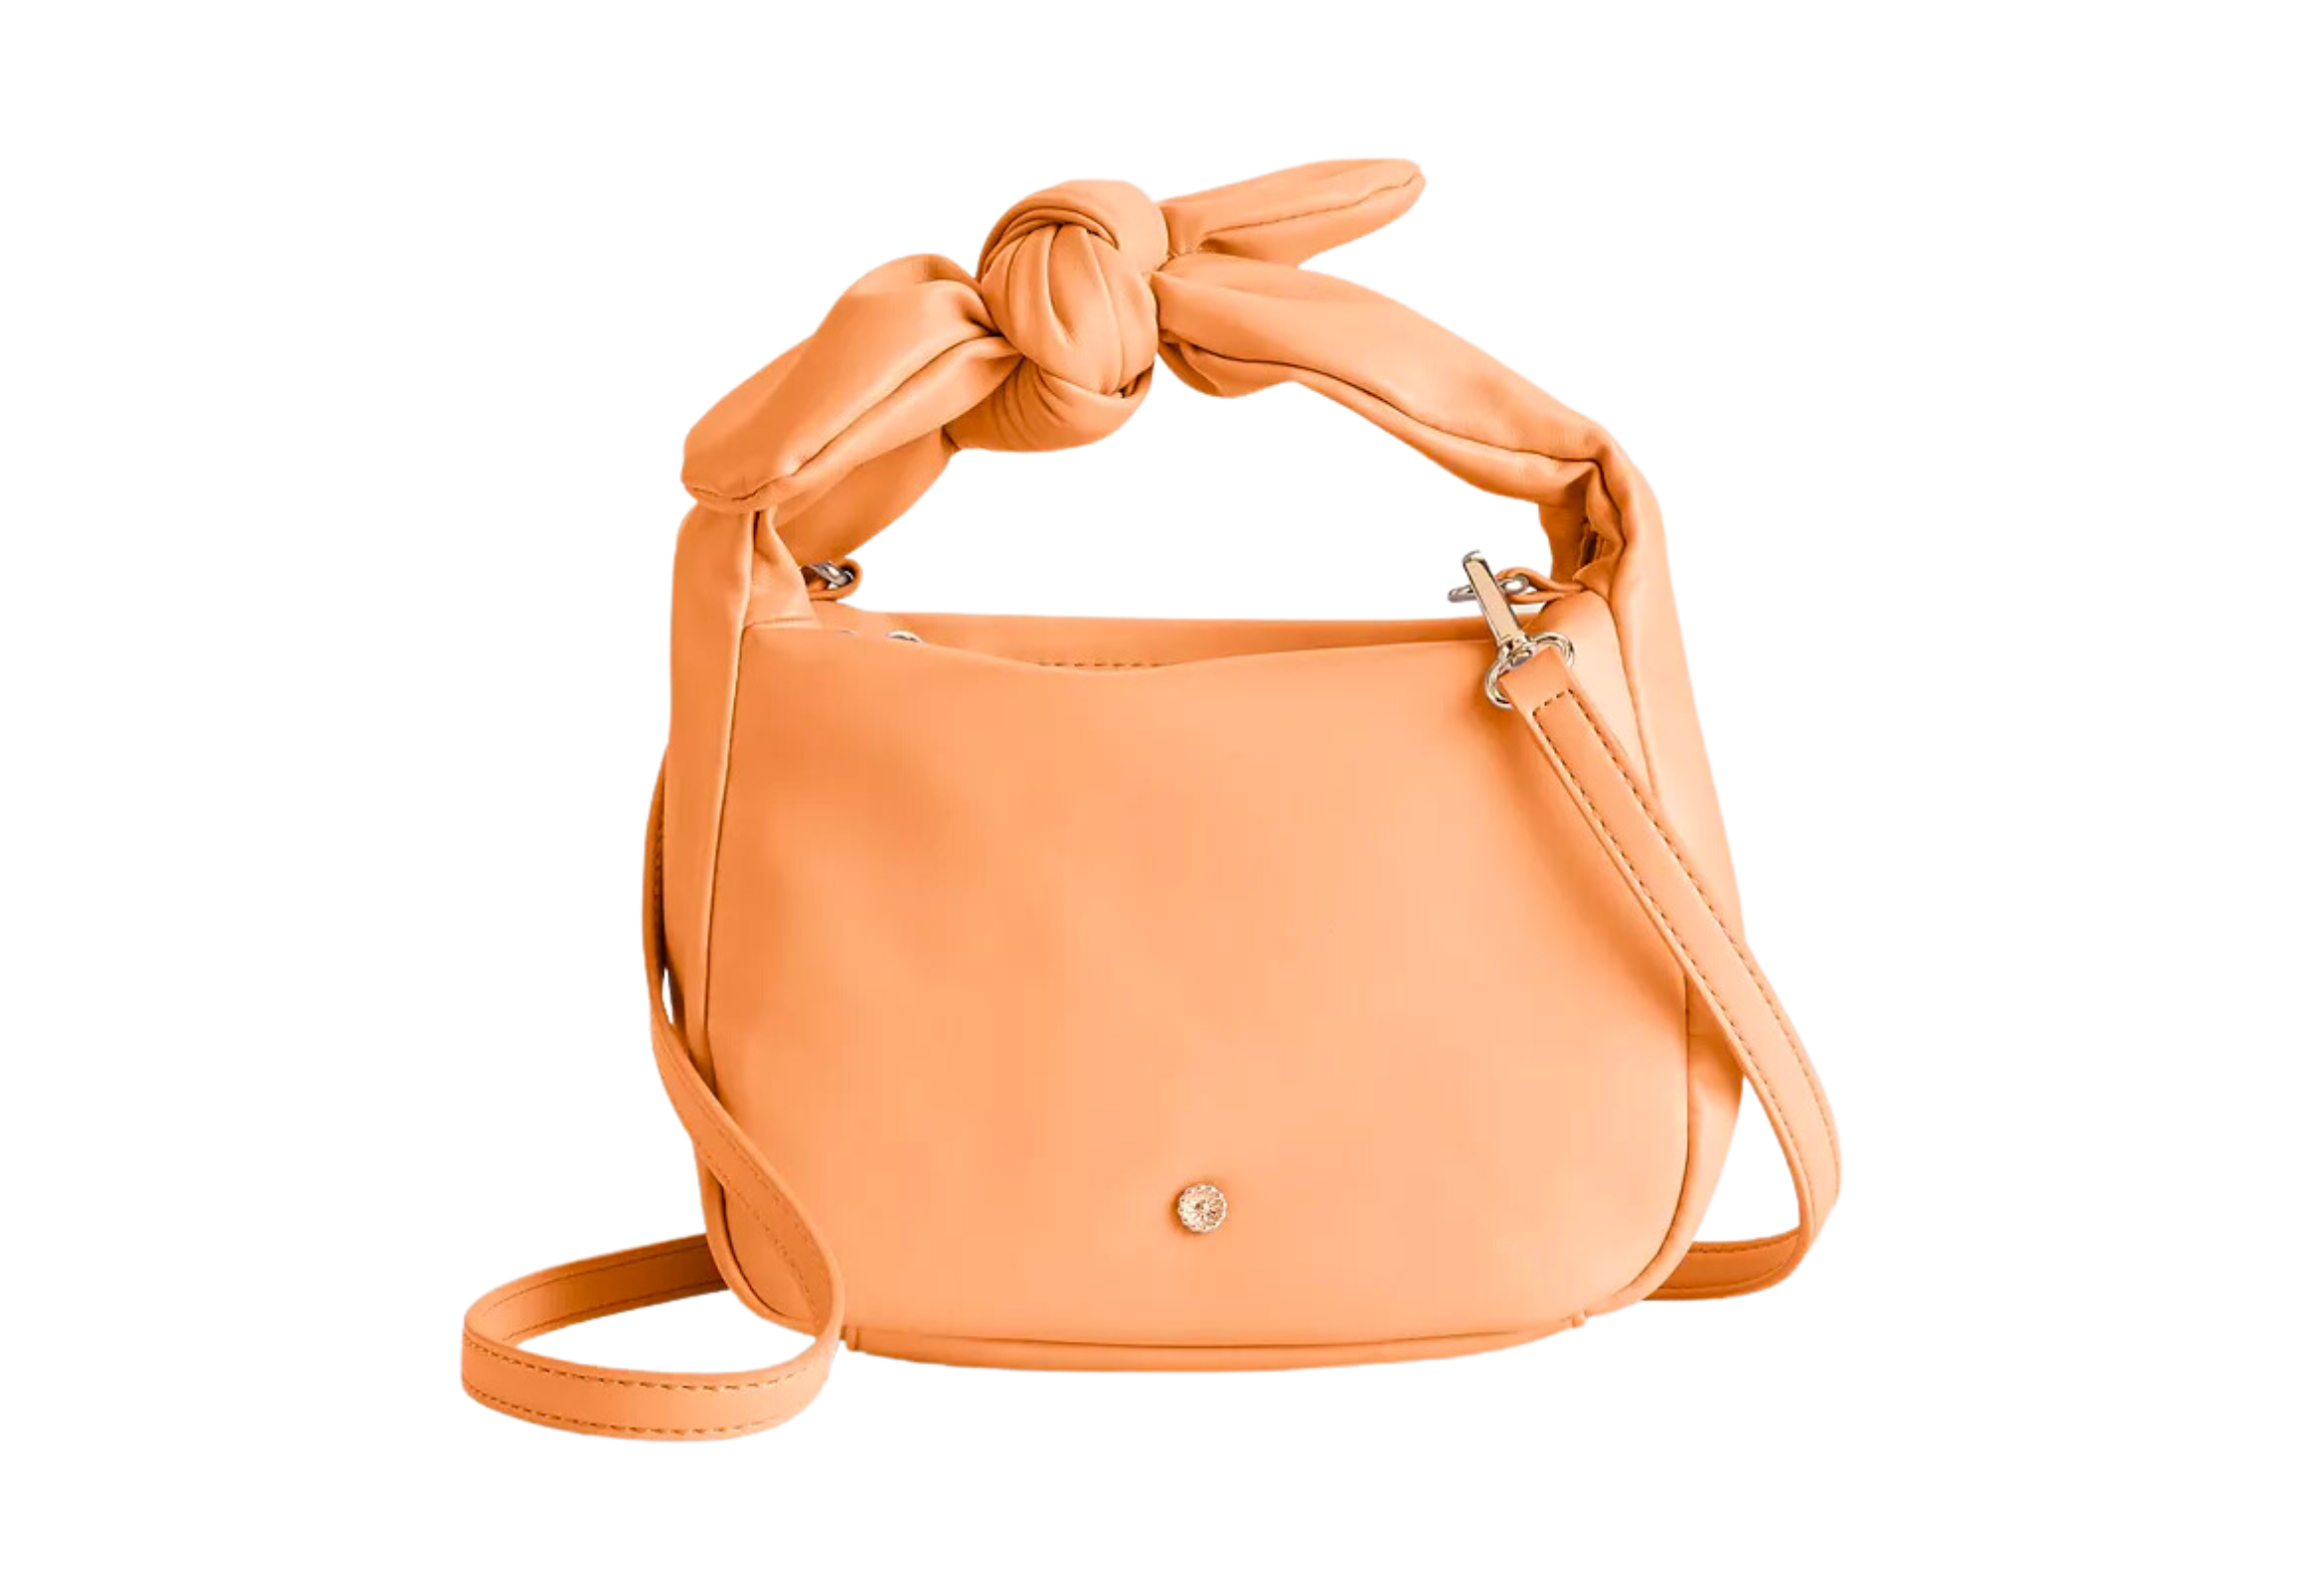 Lauren Conrad Handbags, Under $12 at Kohl's — Save 81% - The